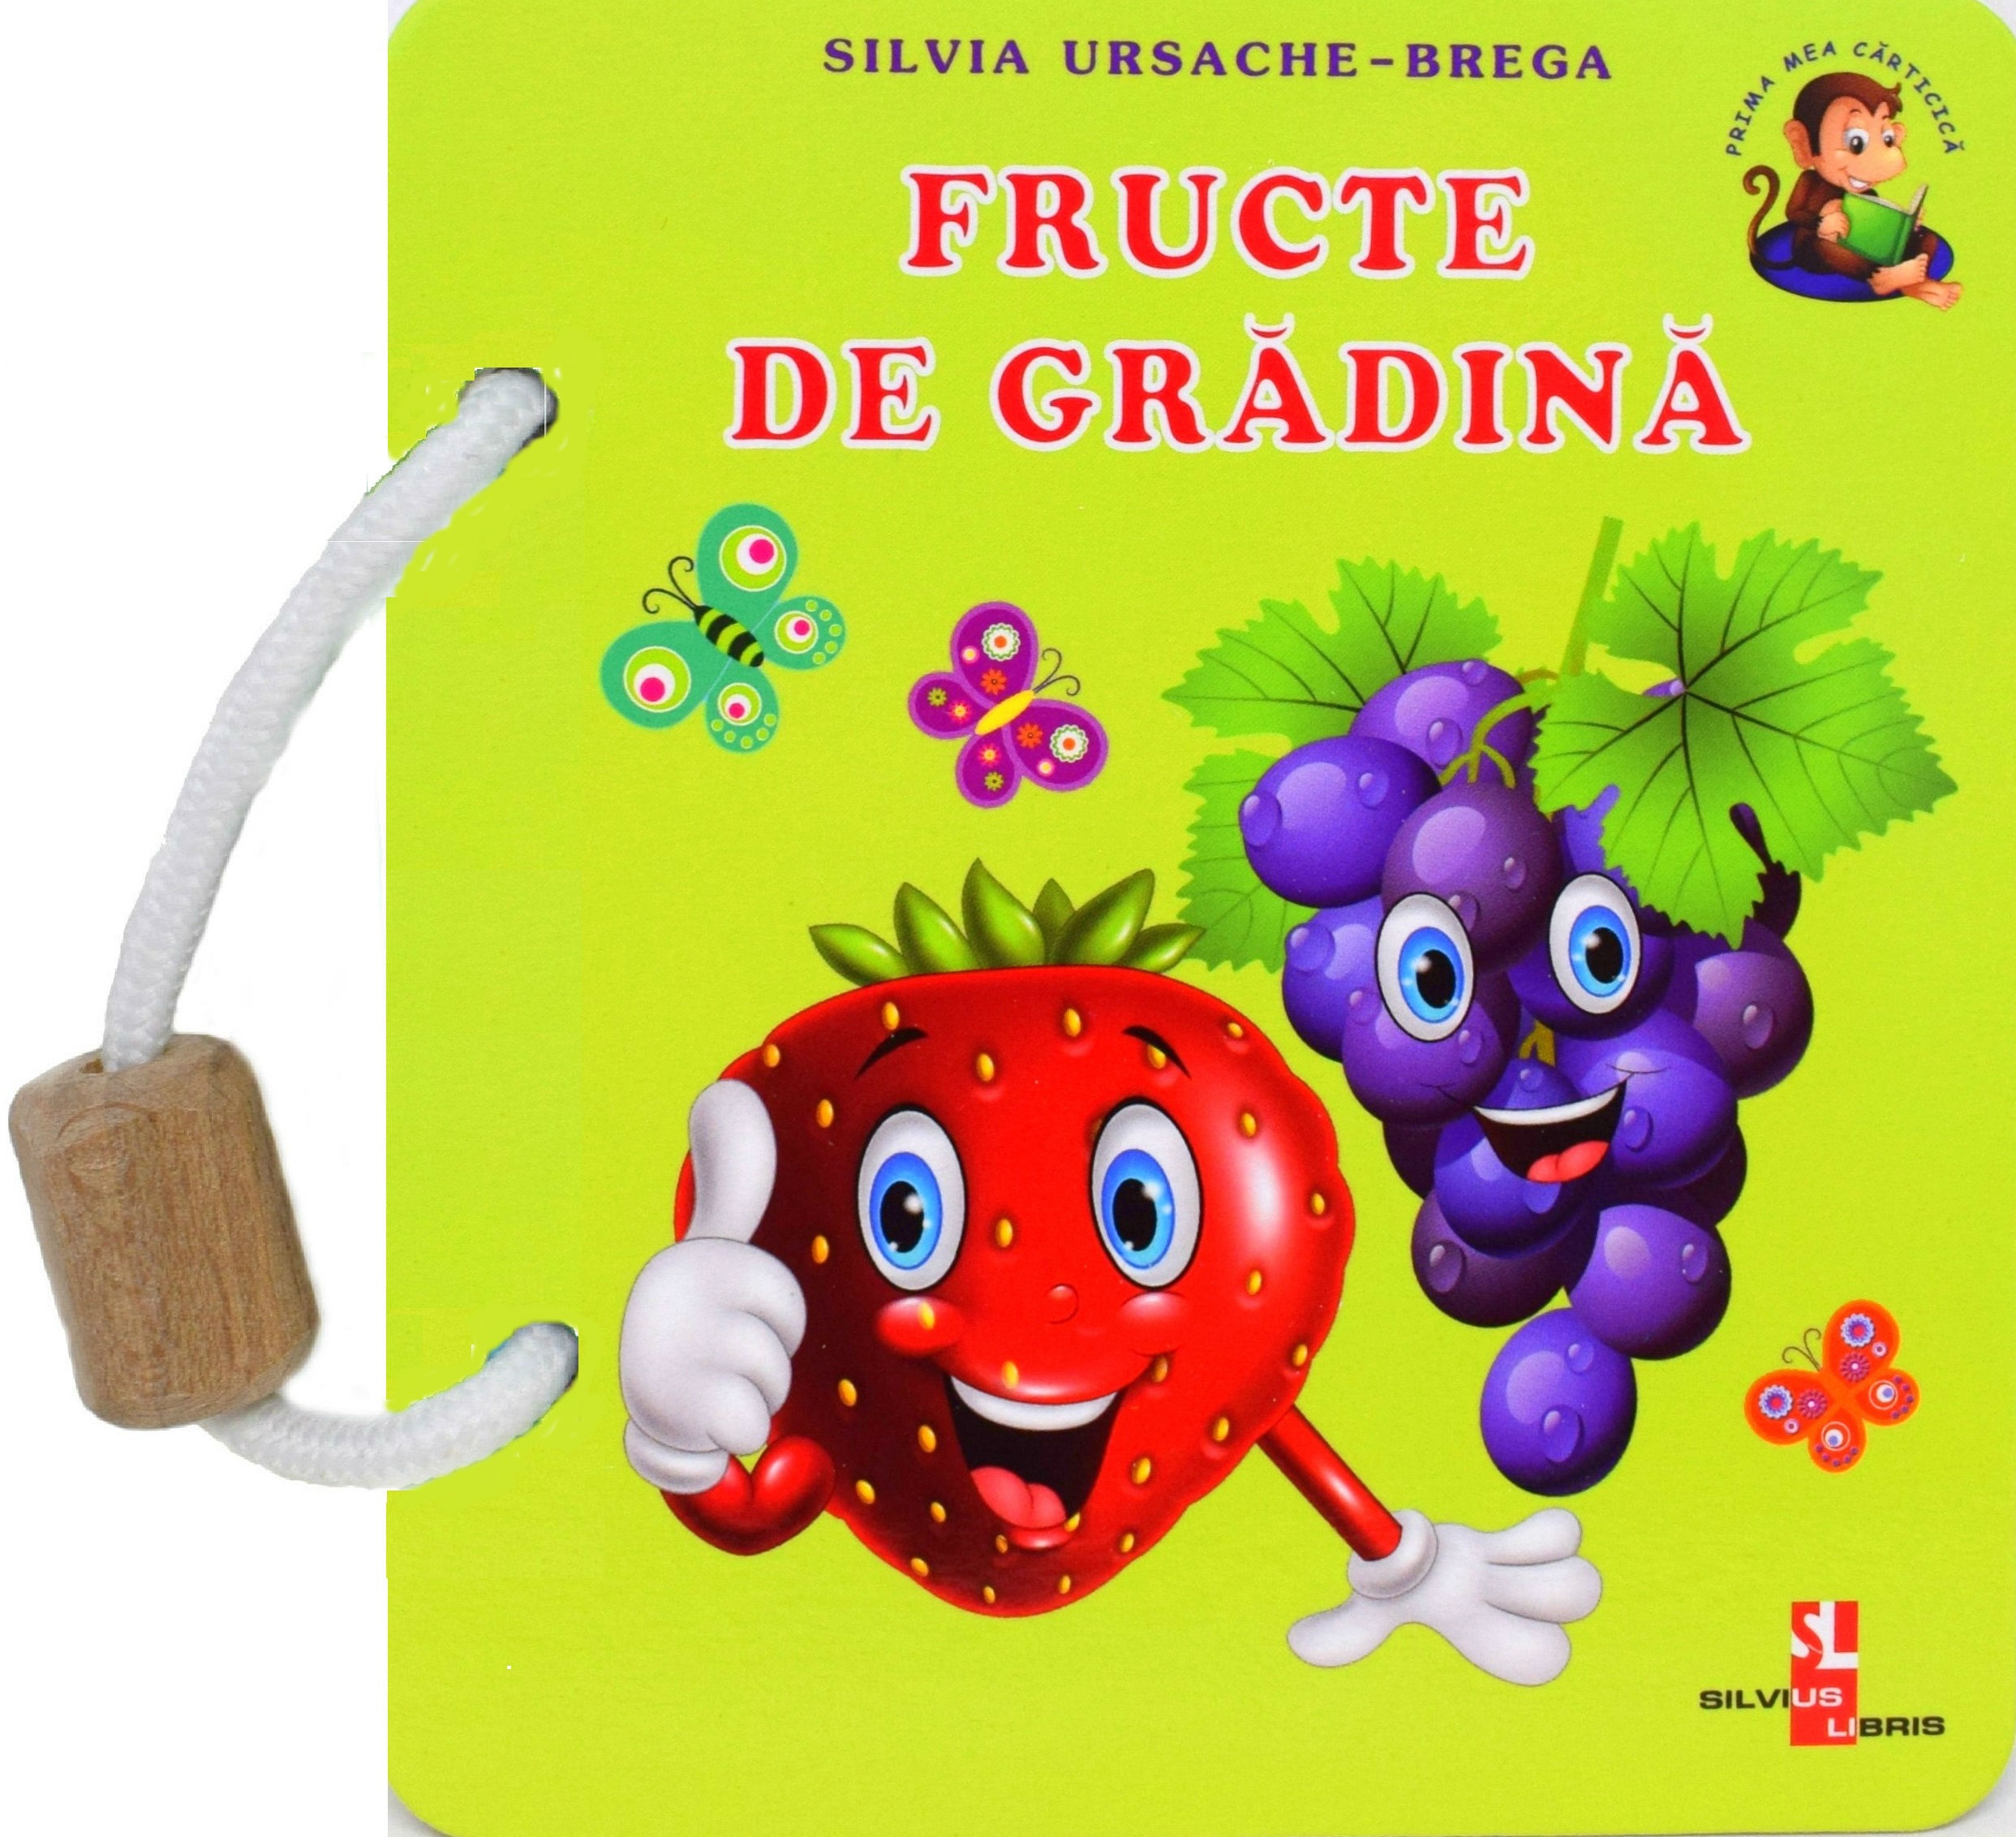 Fructe de gradina - Silvia Ursache-Brega